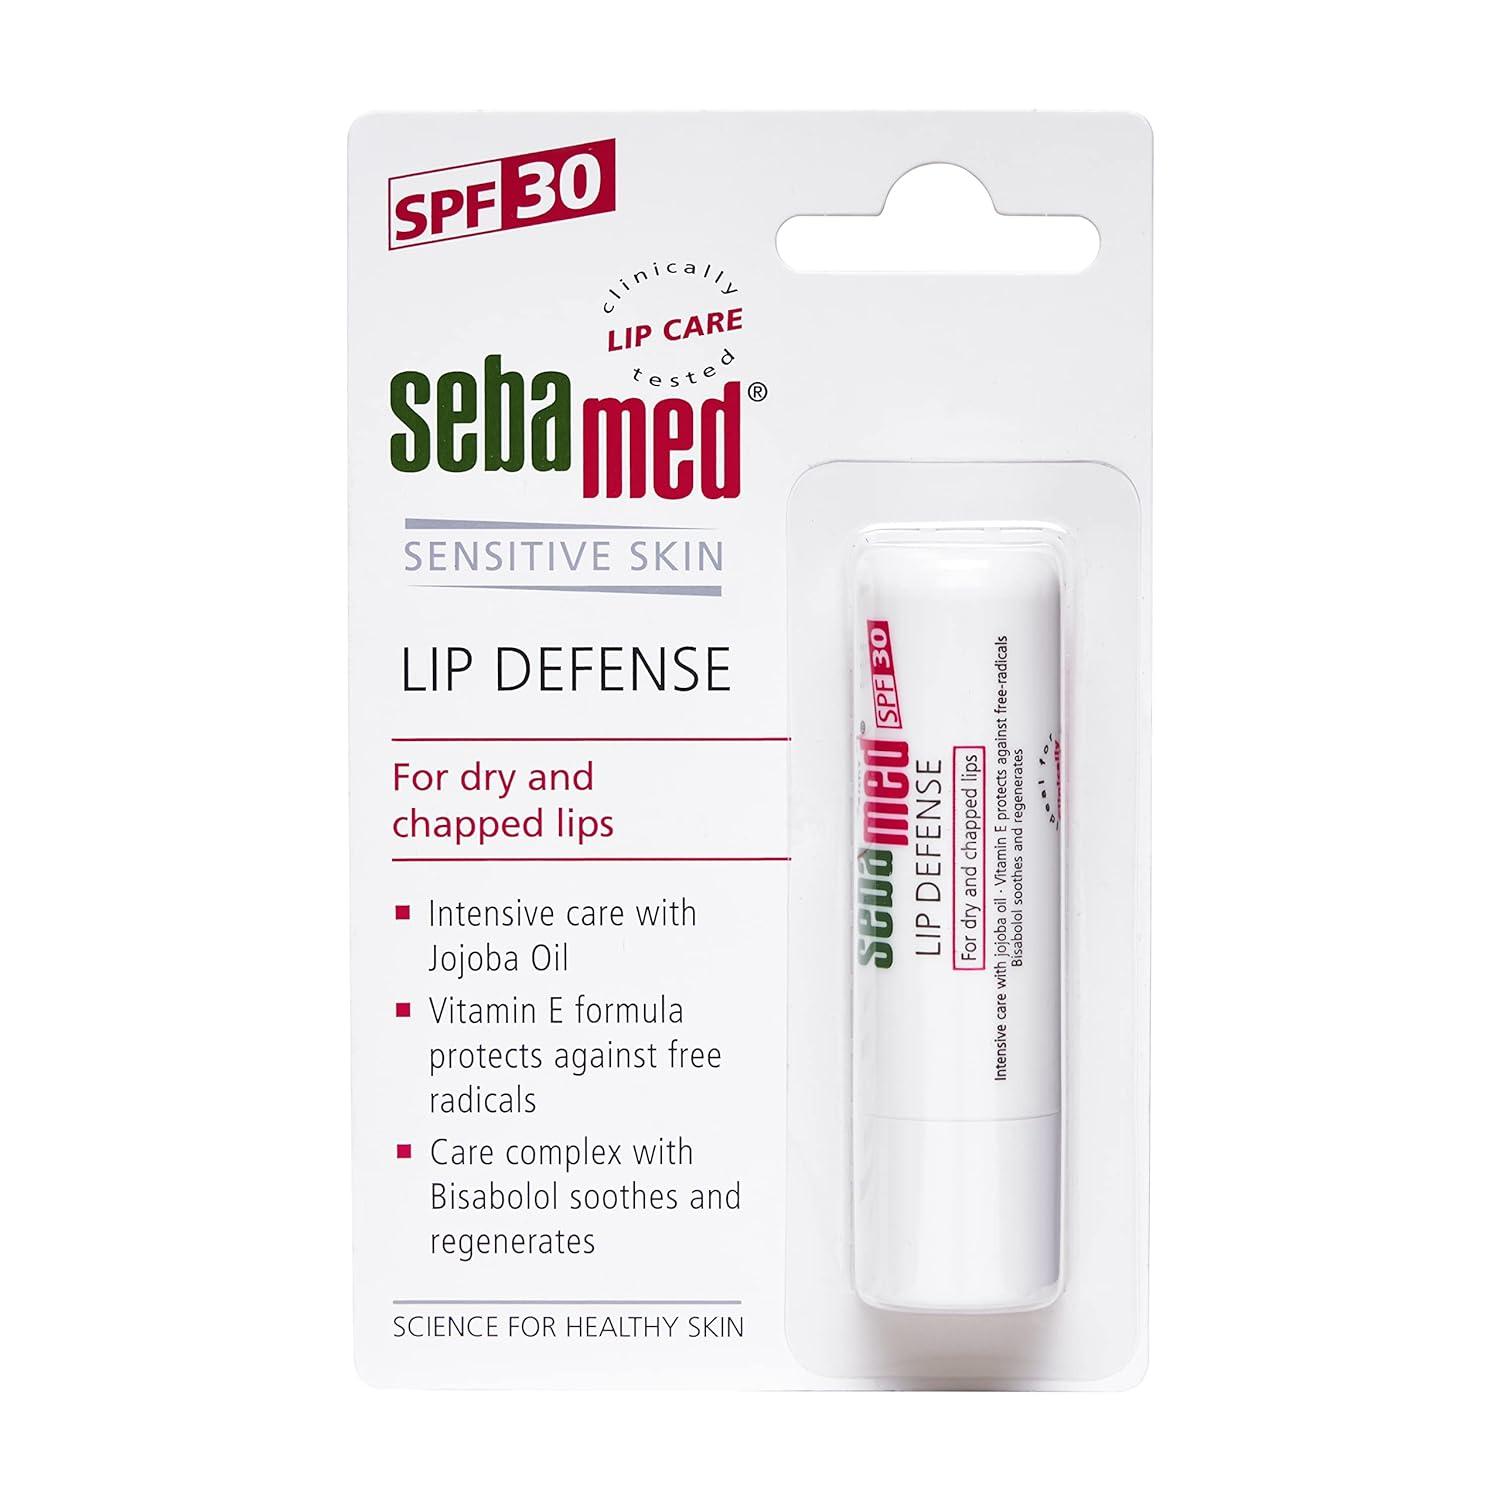 sebamed-lip-defense-4.8gm-|-spf-30-|lip-balm-for-dry-&-chapped-lips-with-natual-oil-&-vitamin-e-|-uv-protection-|-dermatologically-tested,-white